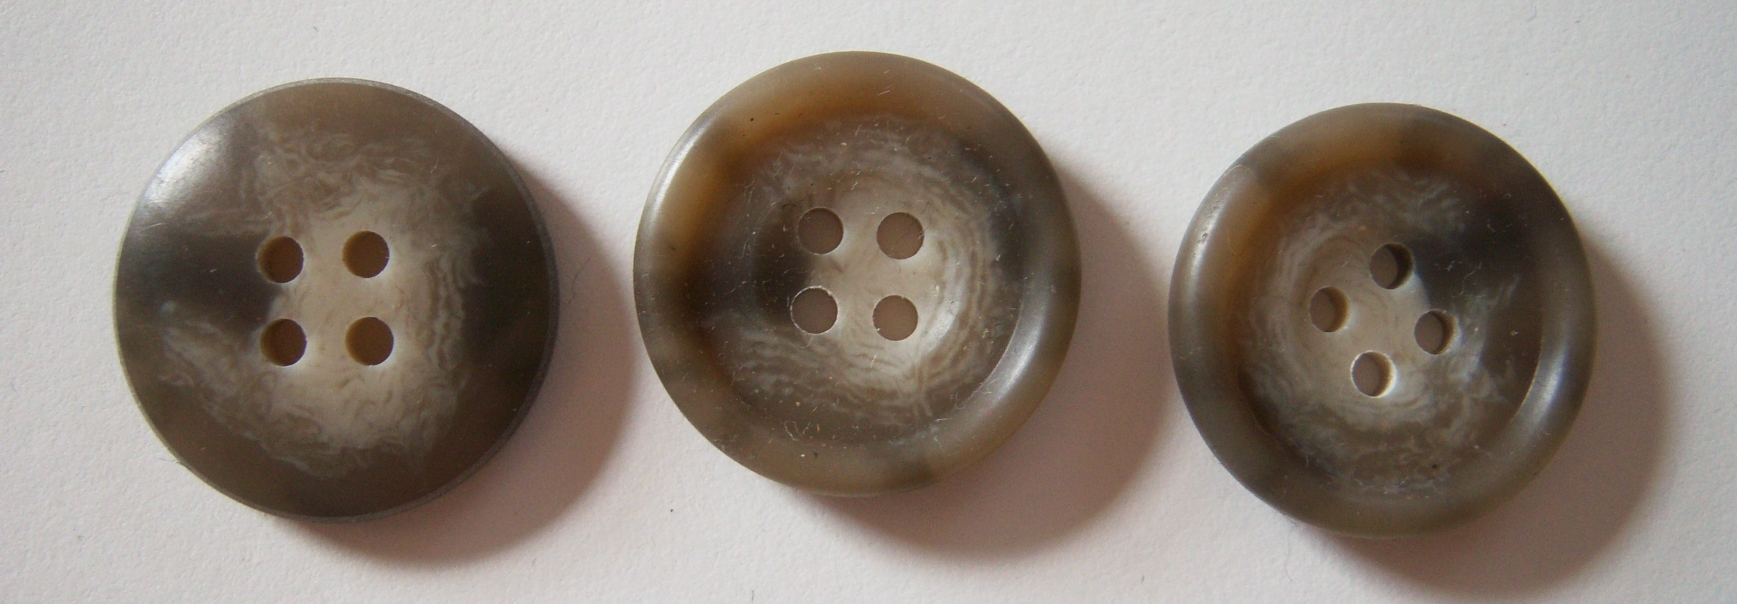 Khaki/Taupe Marbled 1" 4 Hole Button